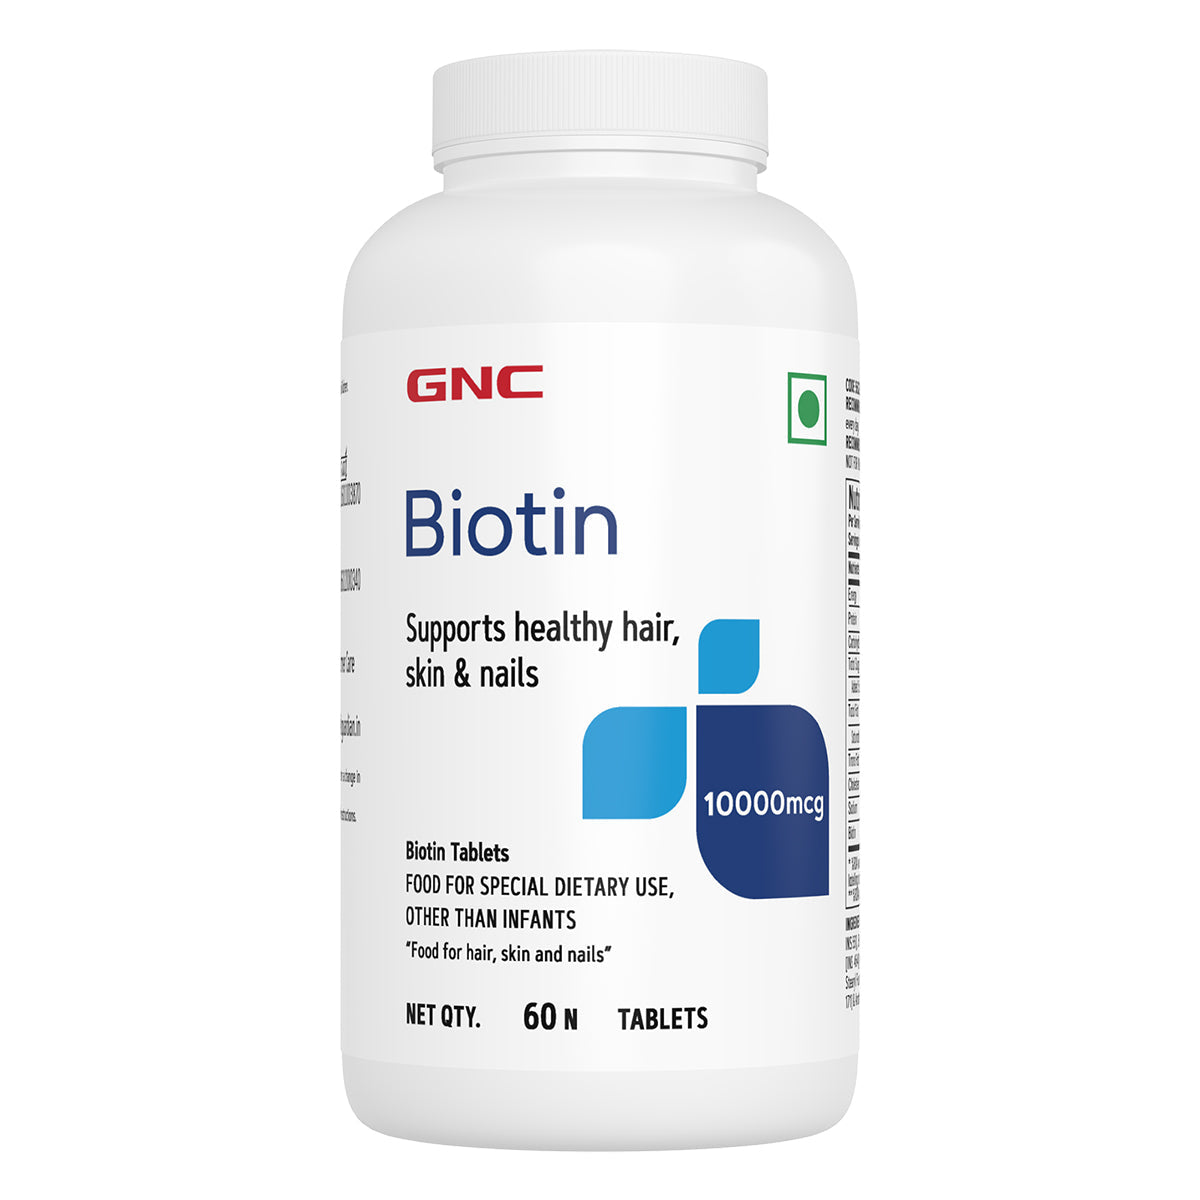 GNC Biotin 10,000mcg